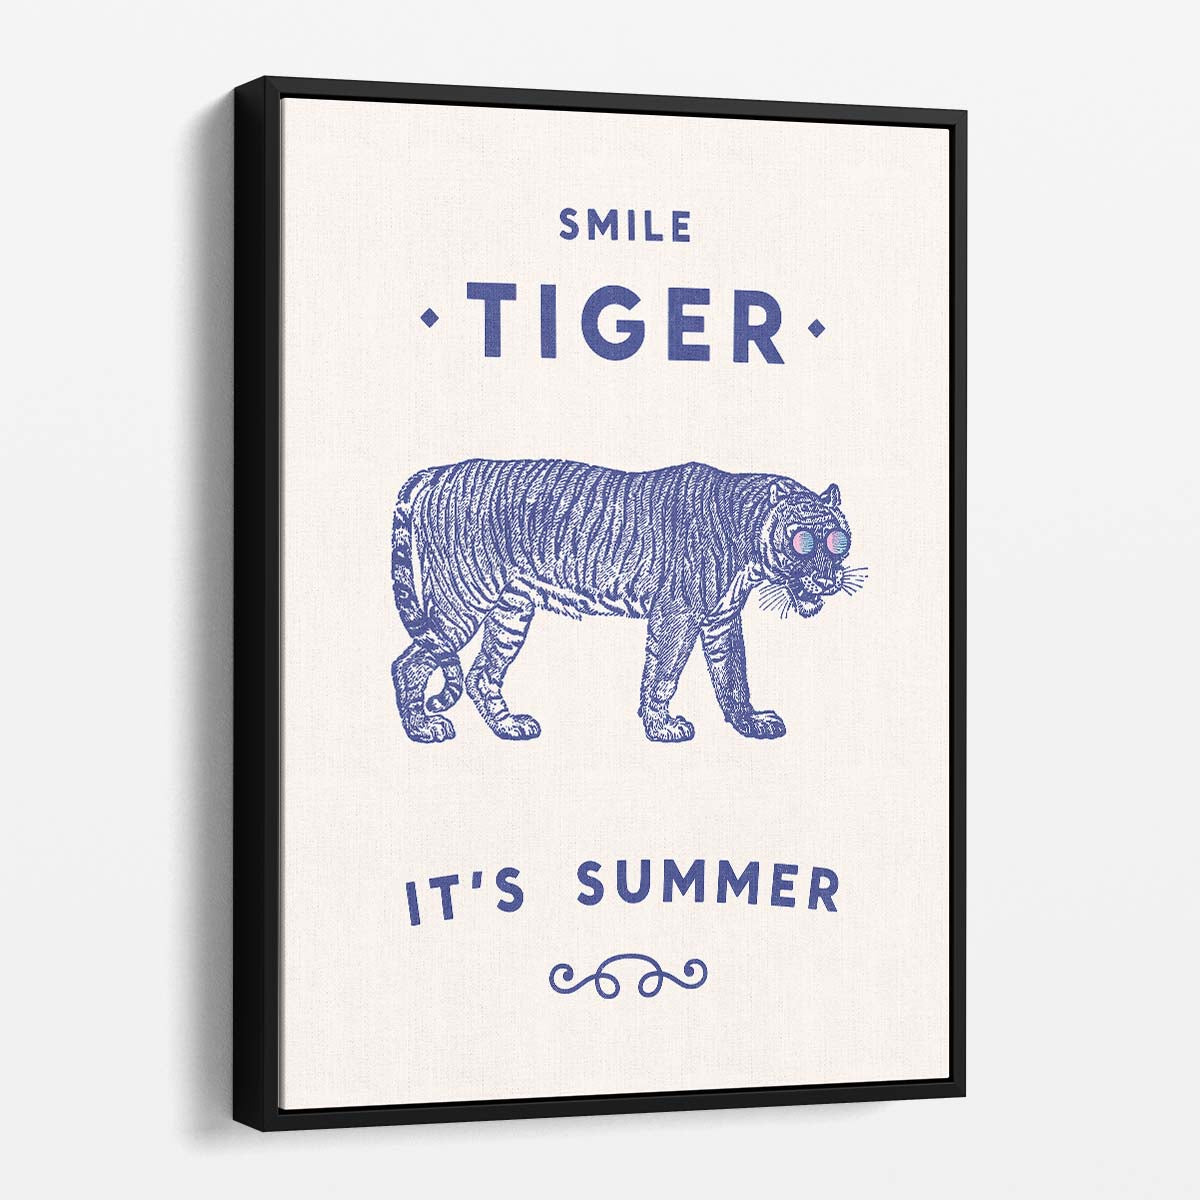 Inspirational Tiger Illustration Art, Bright Background, Feline Wildlife by Luxuriance Designs, made in USA